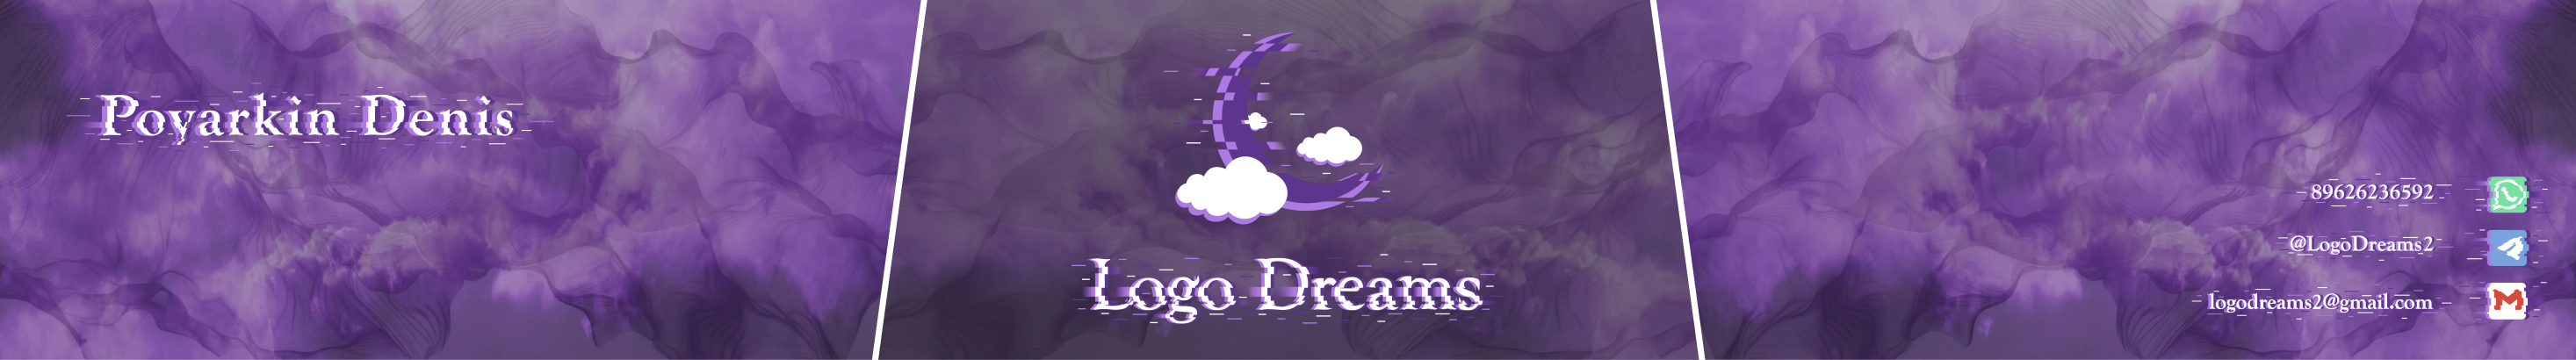 Logo Dreams profil başlığı